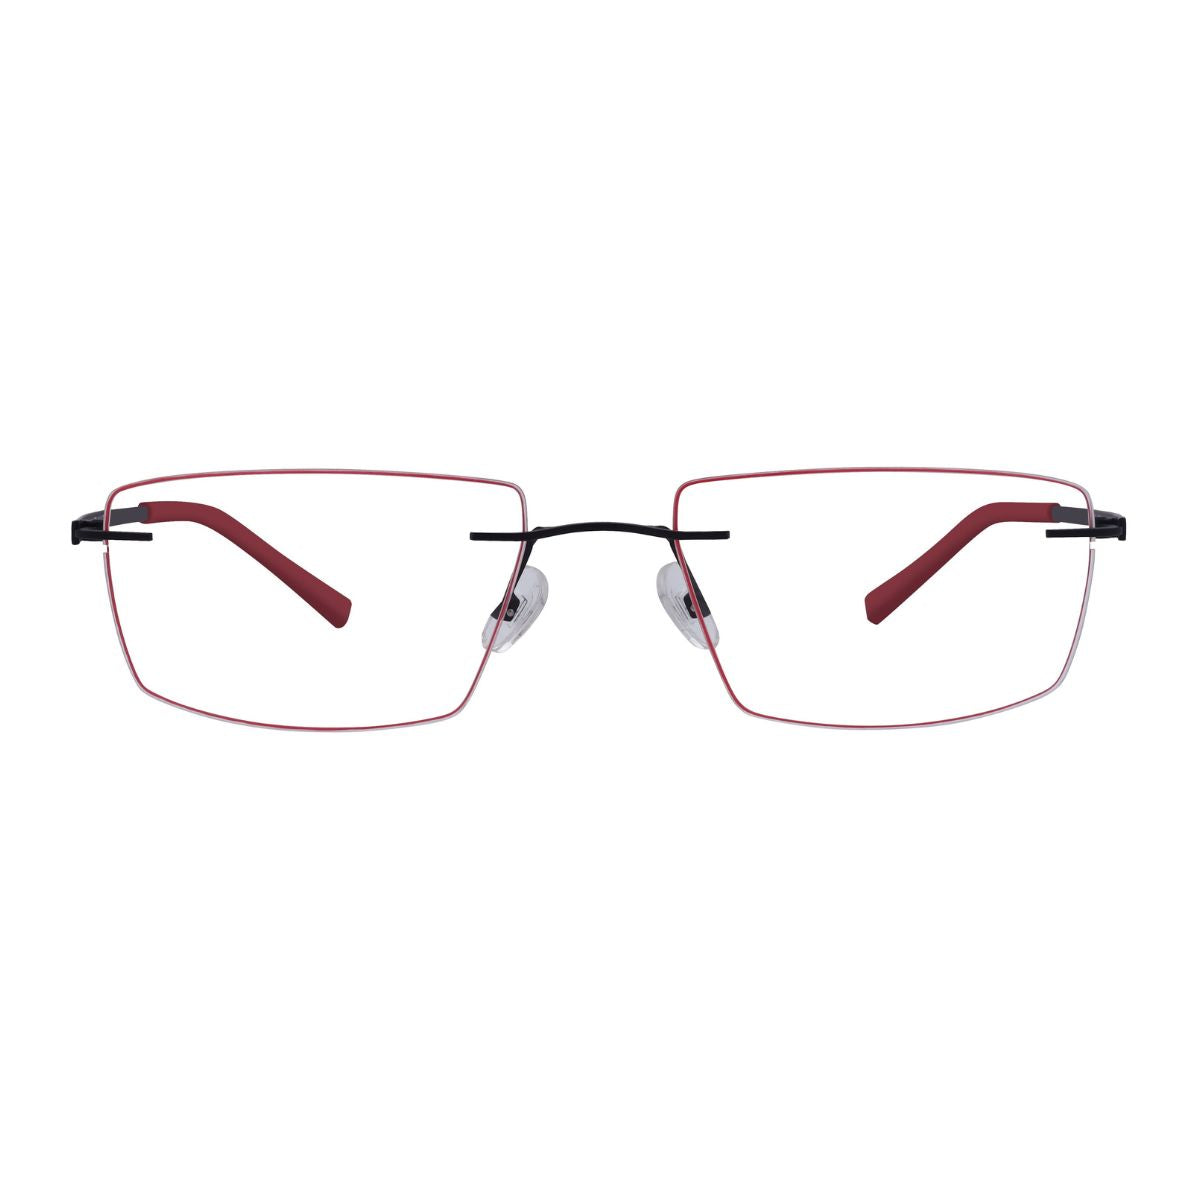 "buy Tommy Hilfiger 6215 C6 optical eyewear frame for men's and women's at optorium"